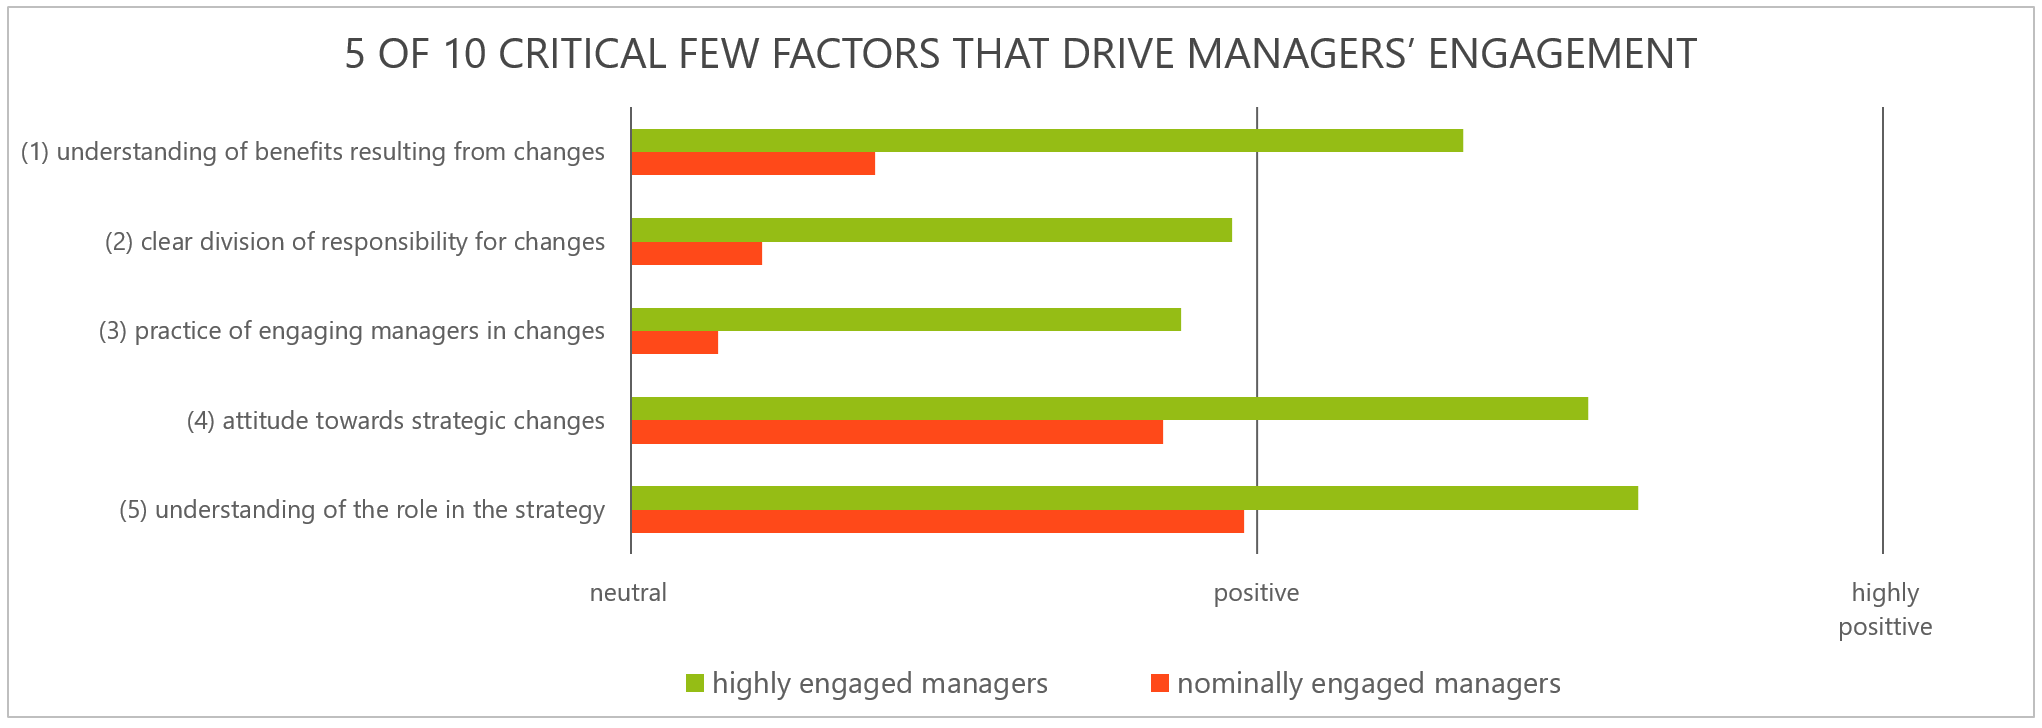 5 of 10 critical factors that drive managers enagagement